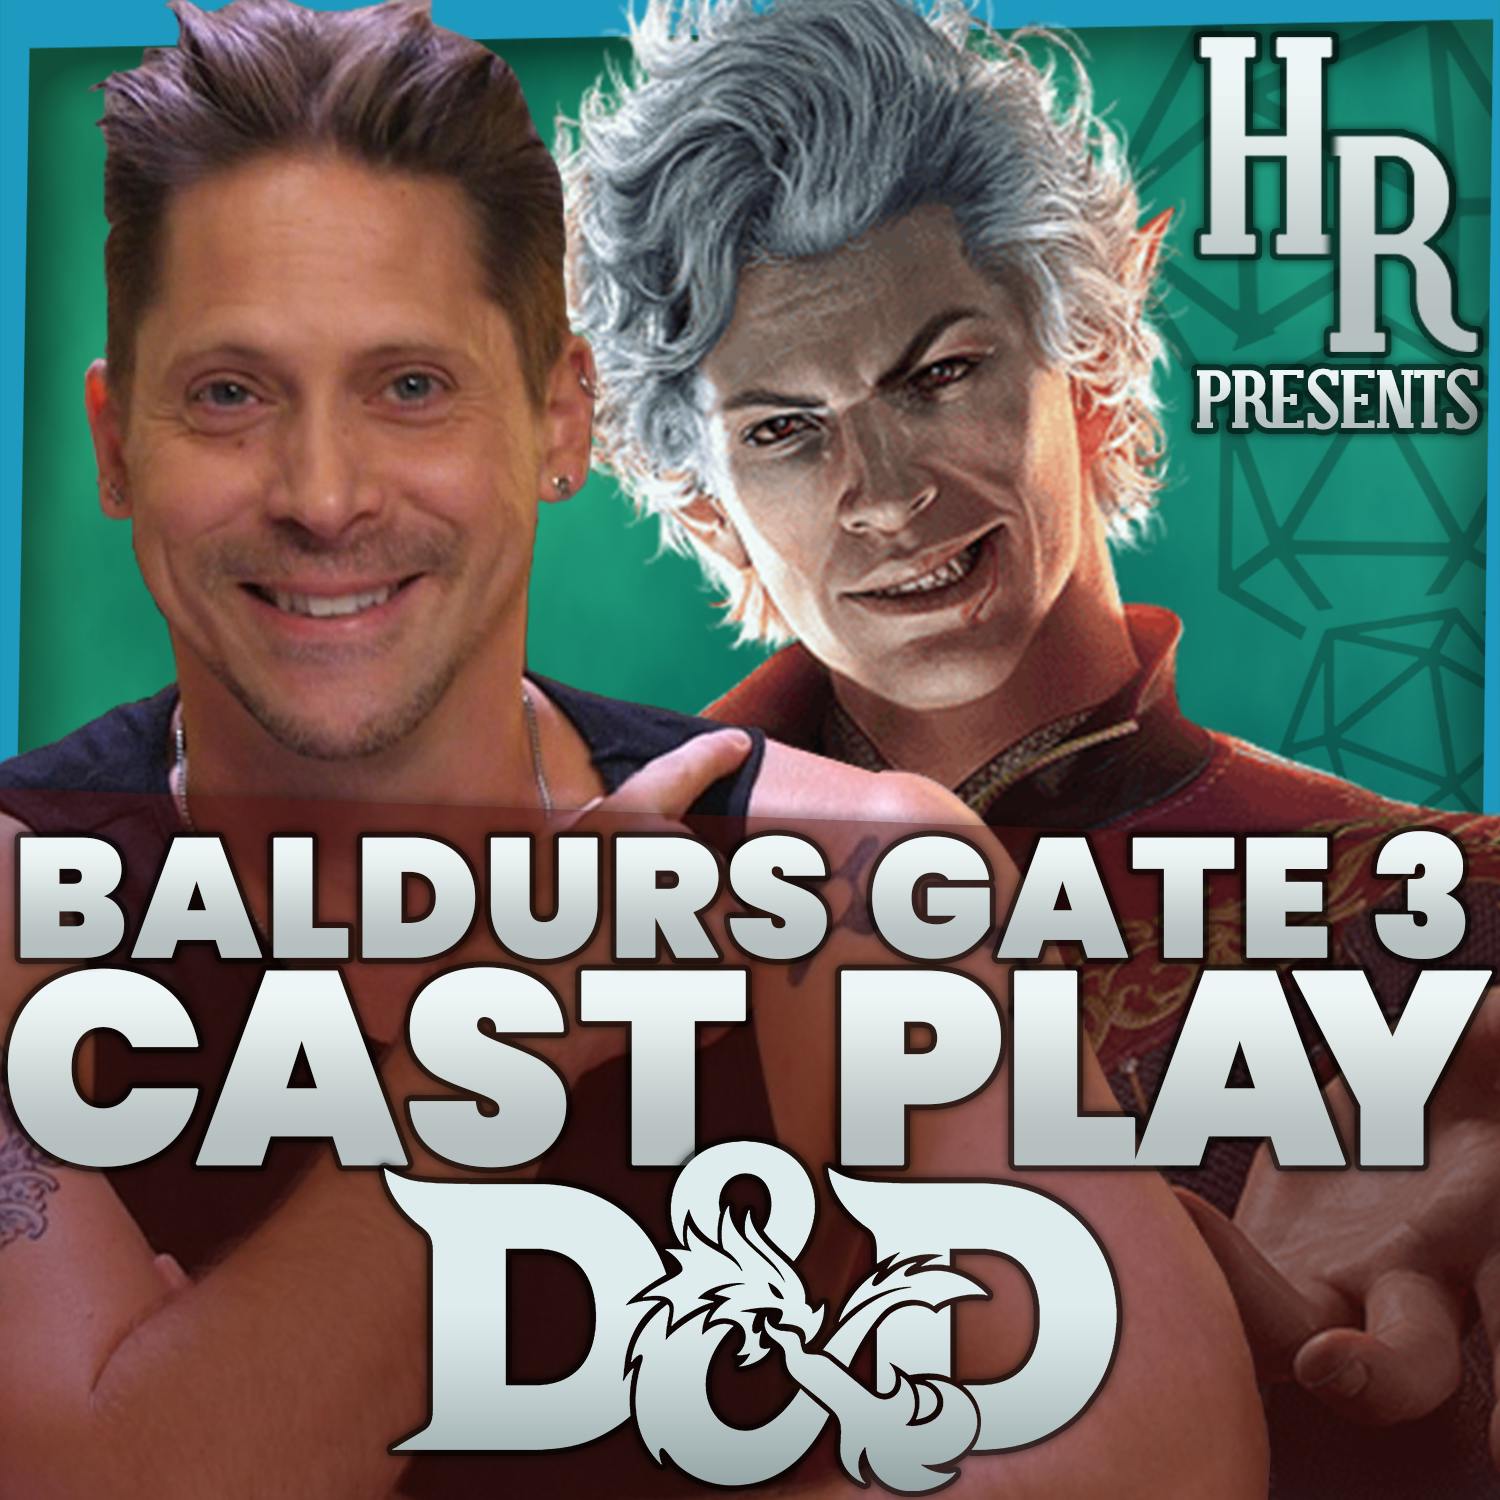 Baldur's Gate 3 Cast play D&D #1 (Part 1) | High Rollers Presents: Shadows of Athkatla